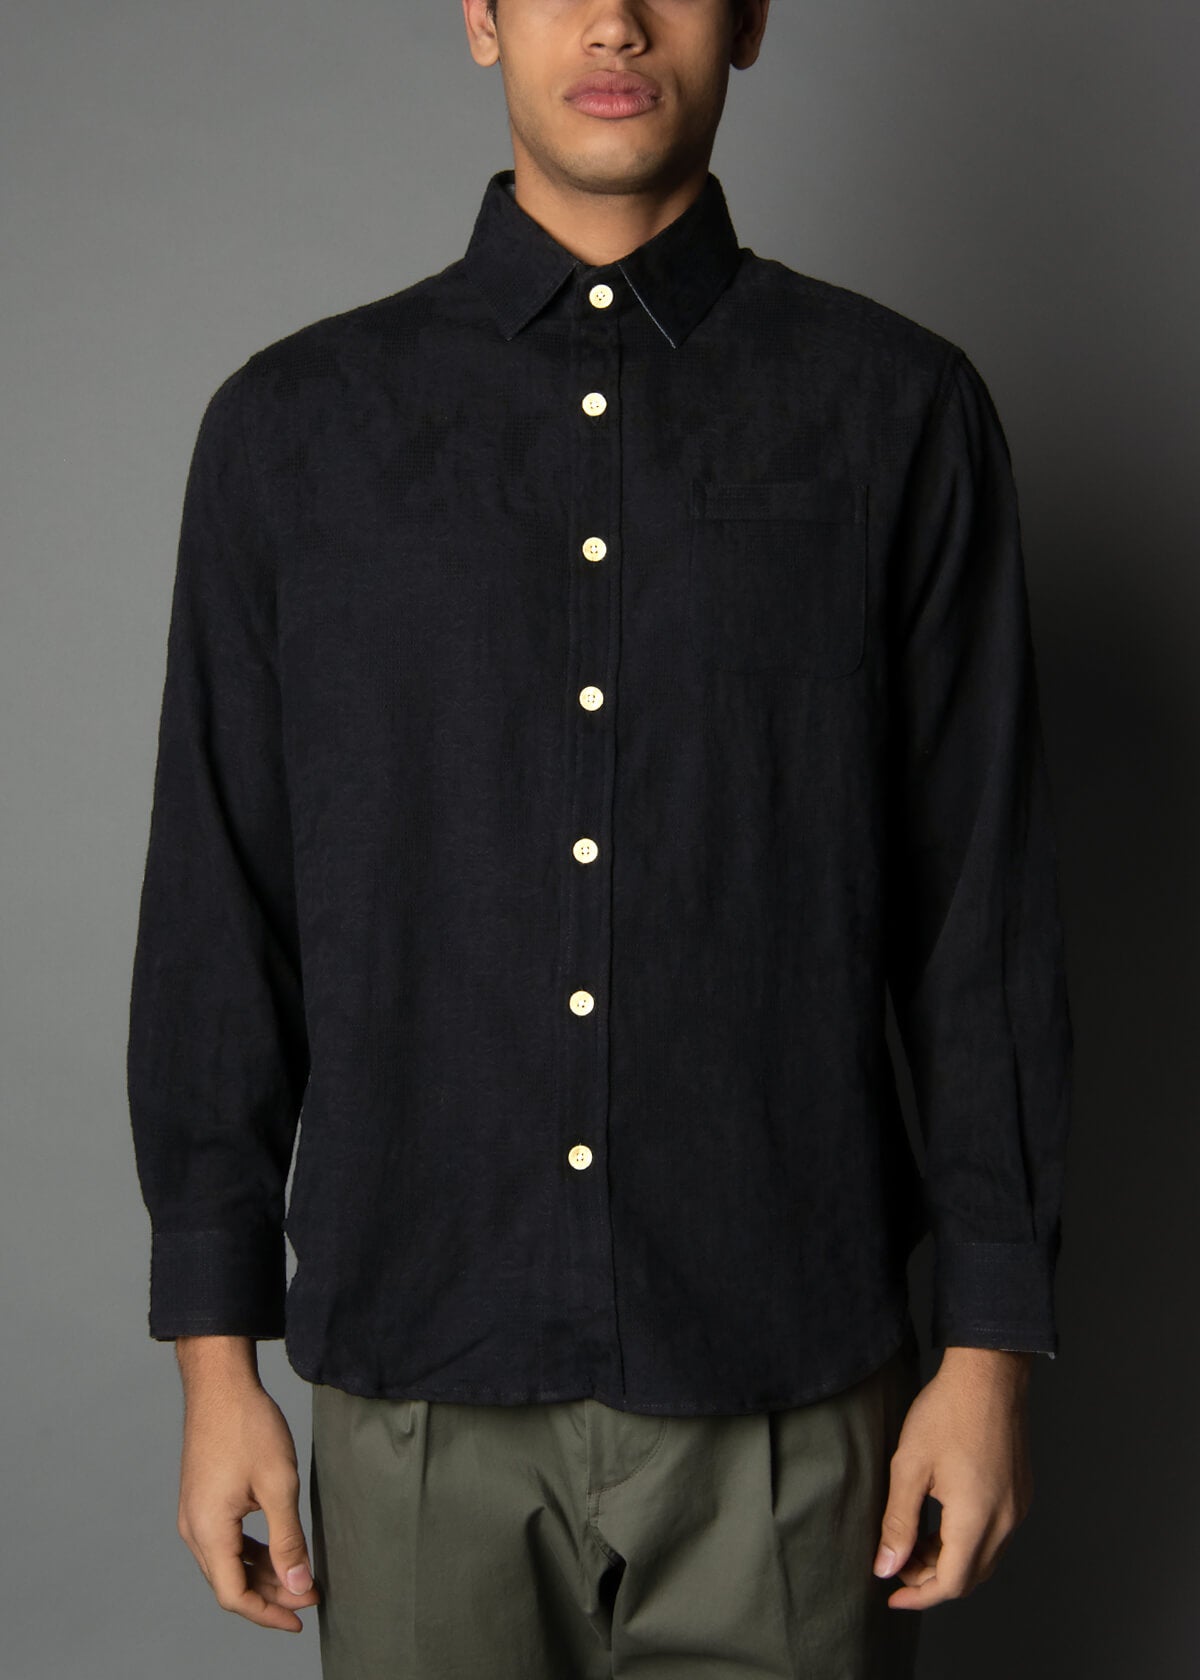 black woven jacquard shirt for men